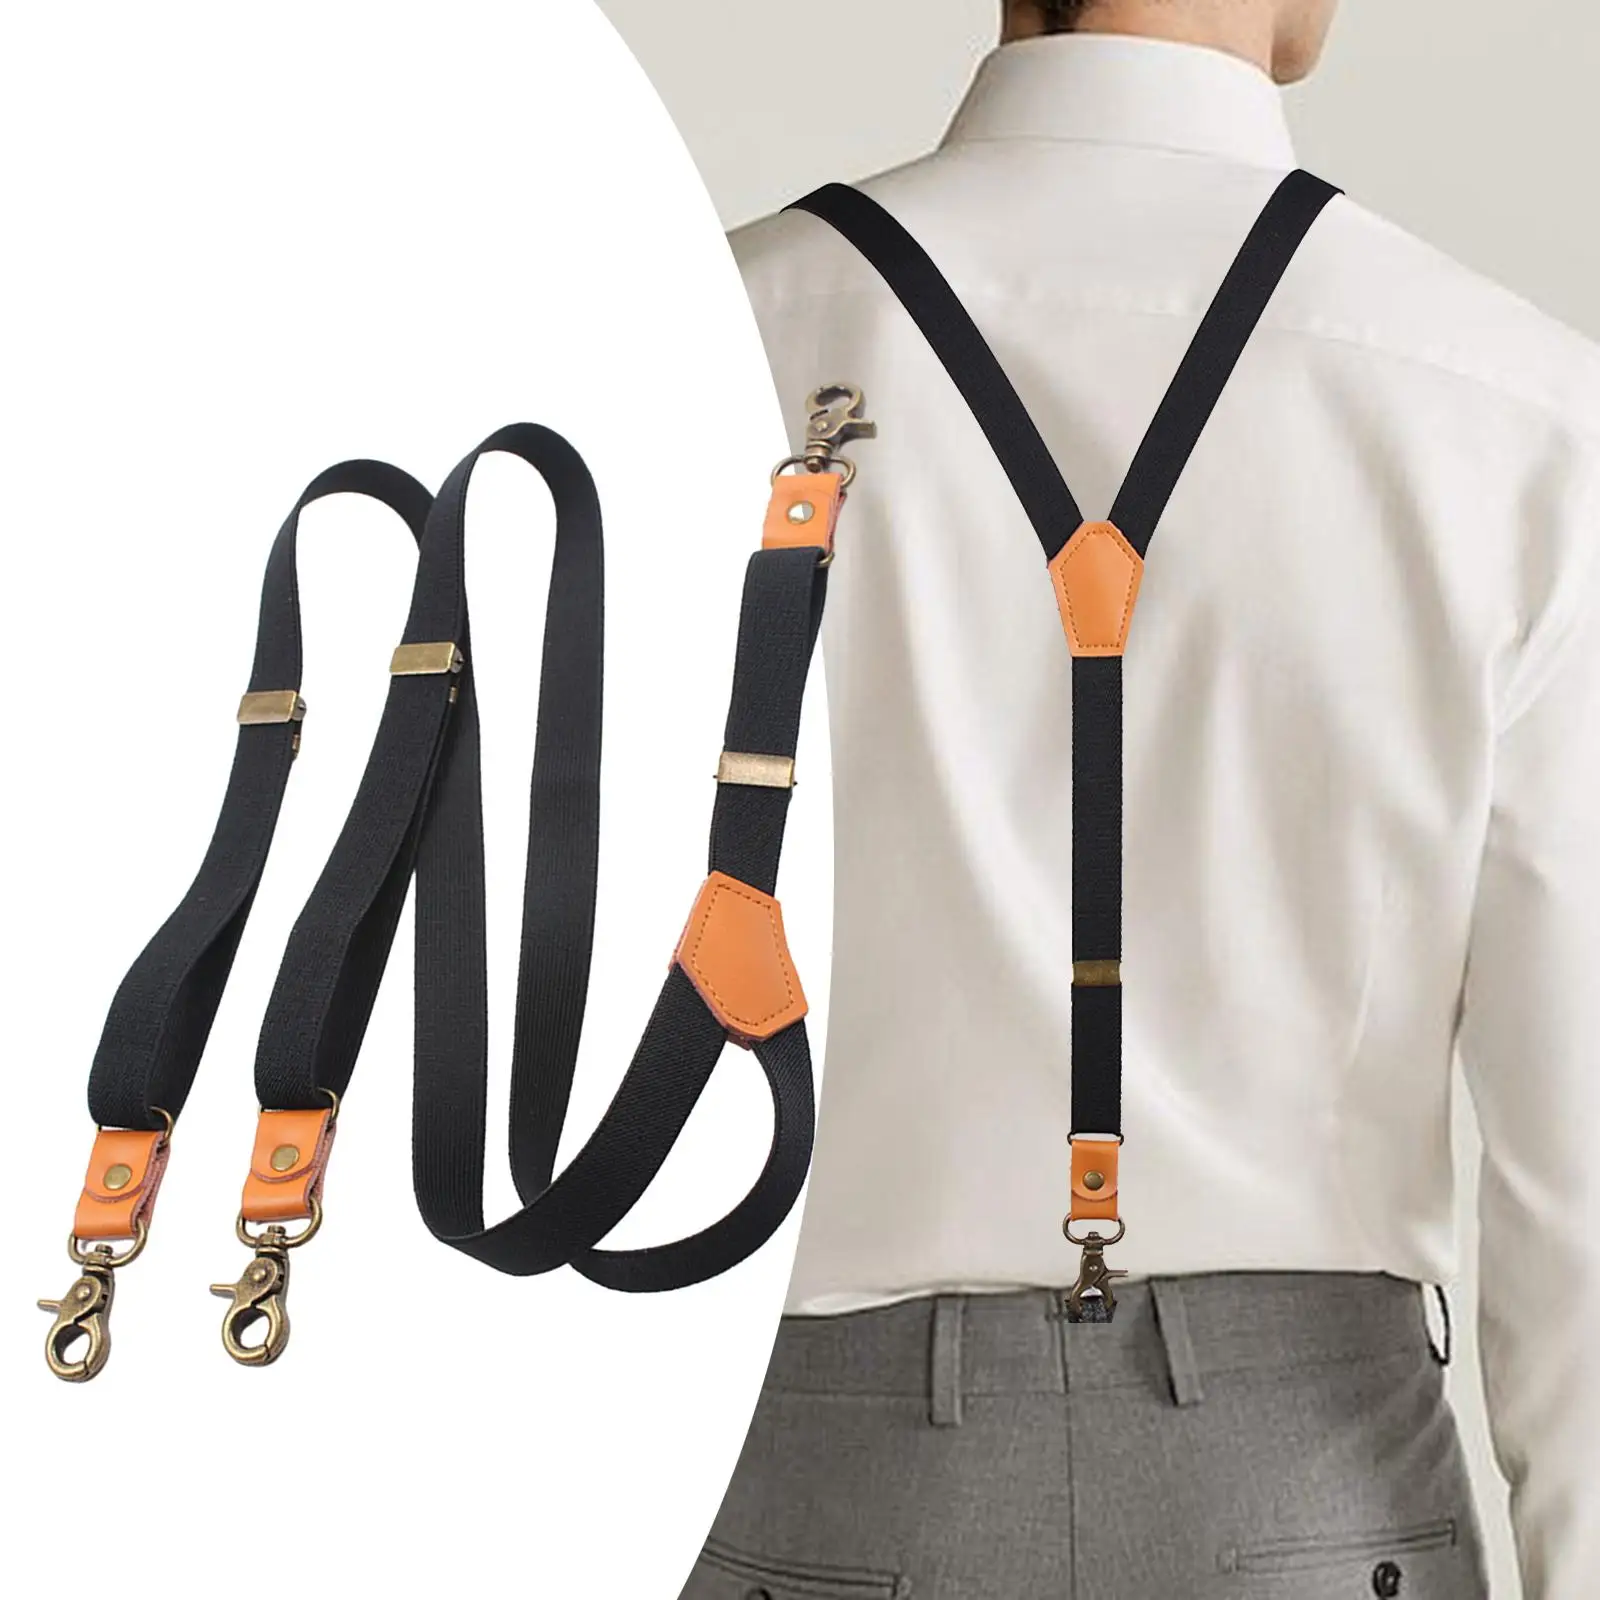 Men`s Suspenders, Fashion Adjustable Braces, Adjustable Elastic Straps Swivel Hooks, Belt Loops Braces Mens Womens